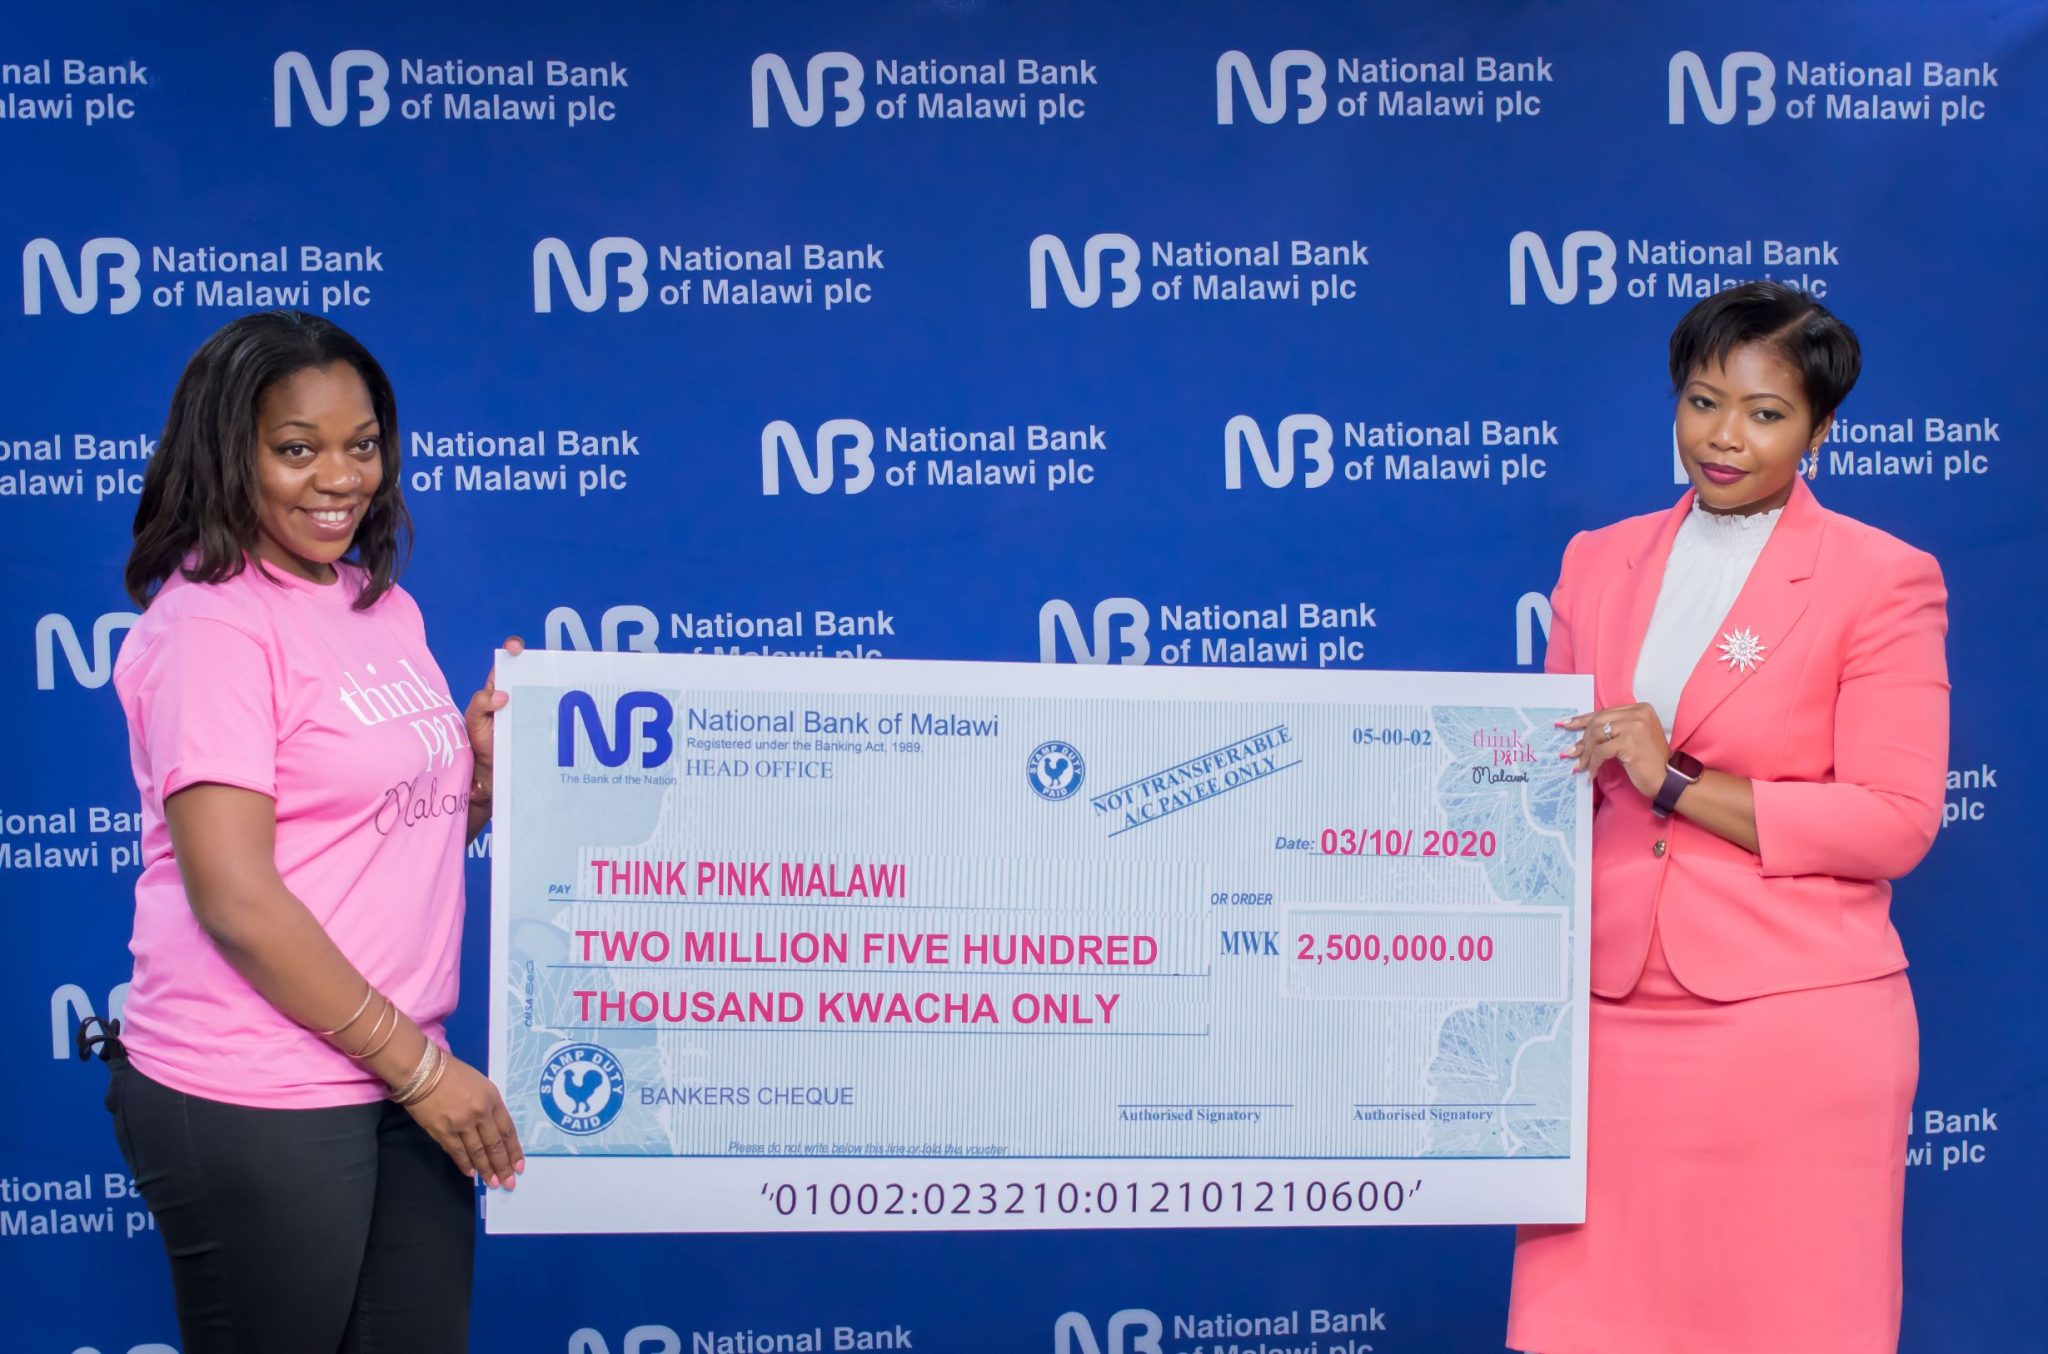 NBM plc Donates K2.5 million to Think Pink Malawi for Cancer Screening